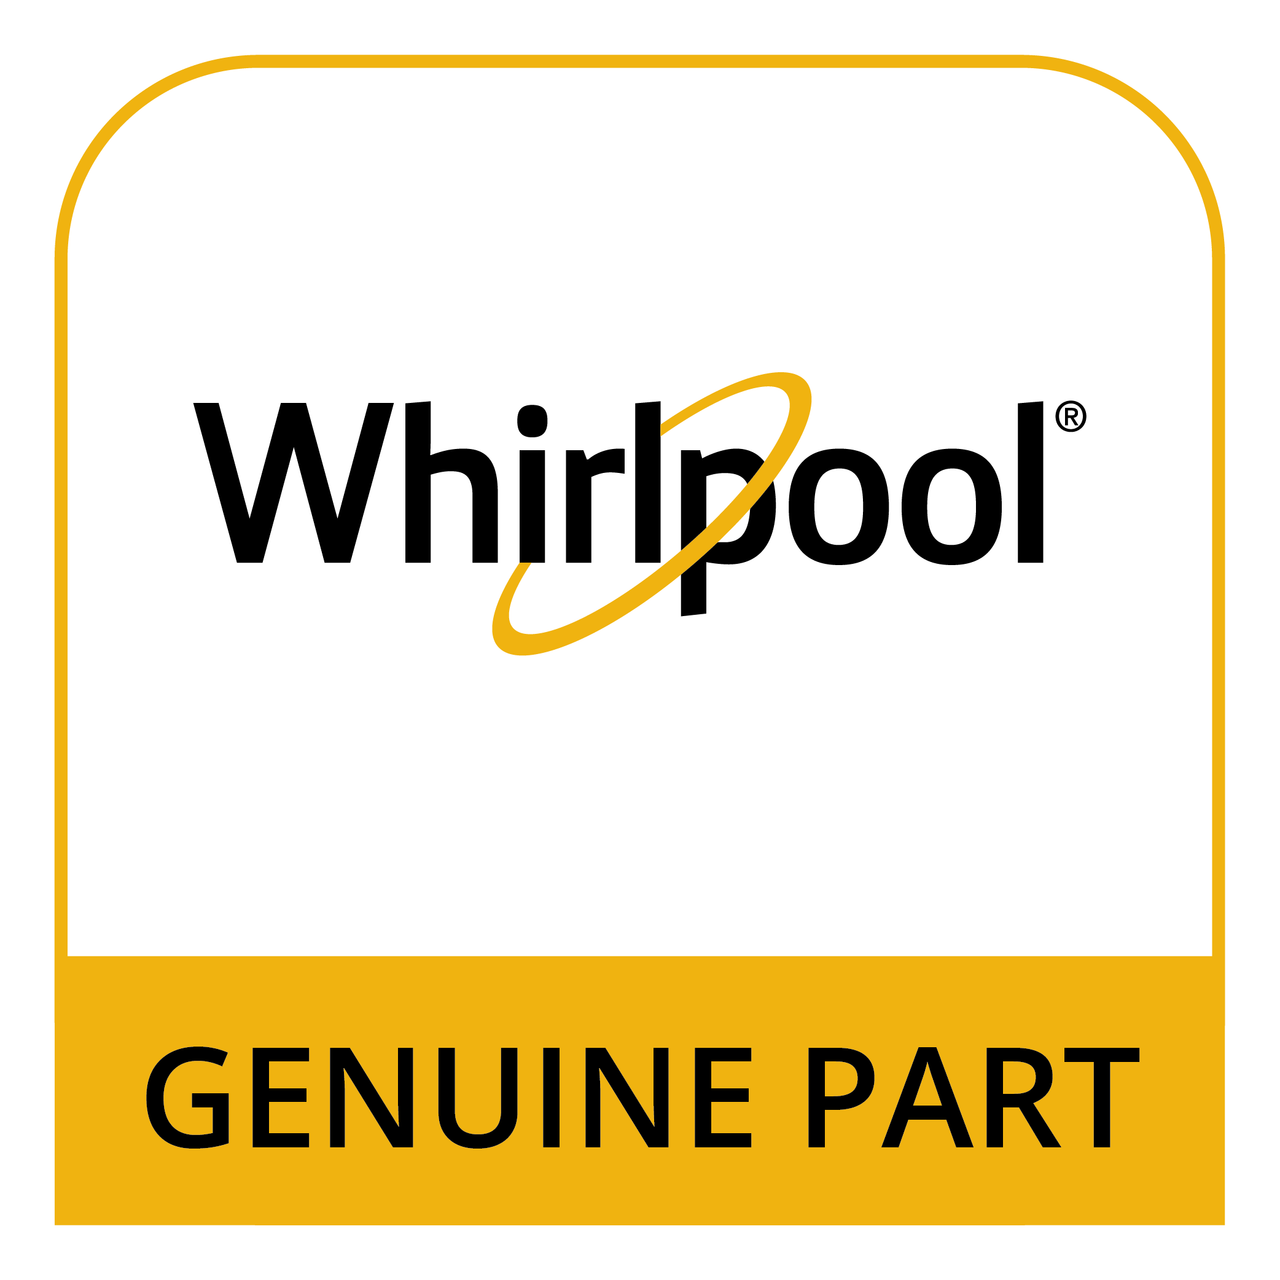 Whirlpool 341029 - Clamp - Genuine Part